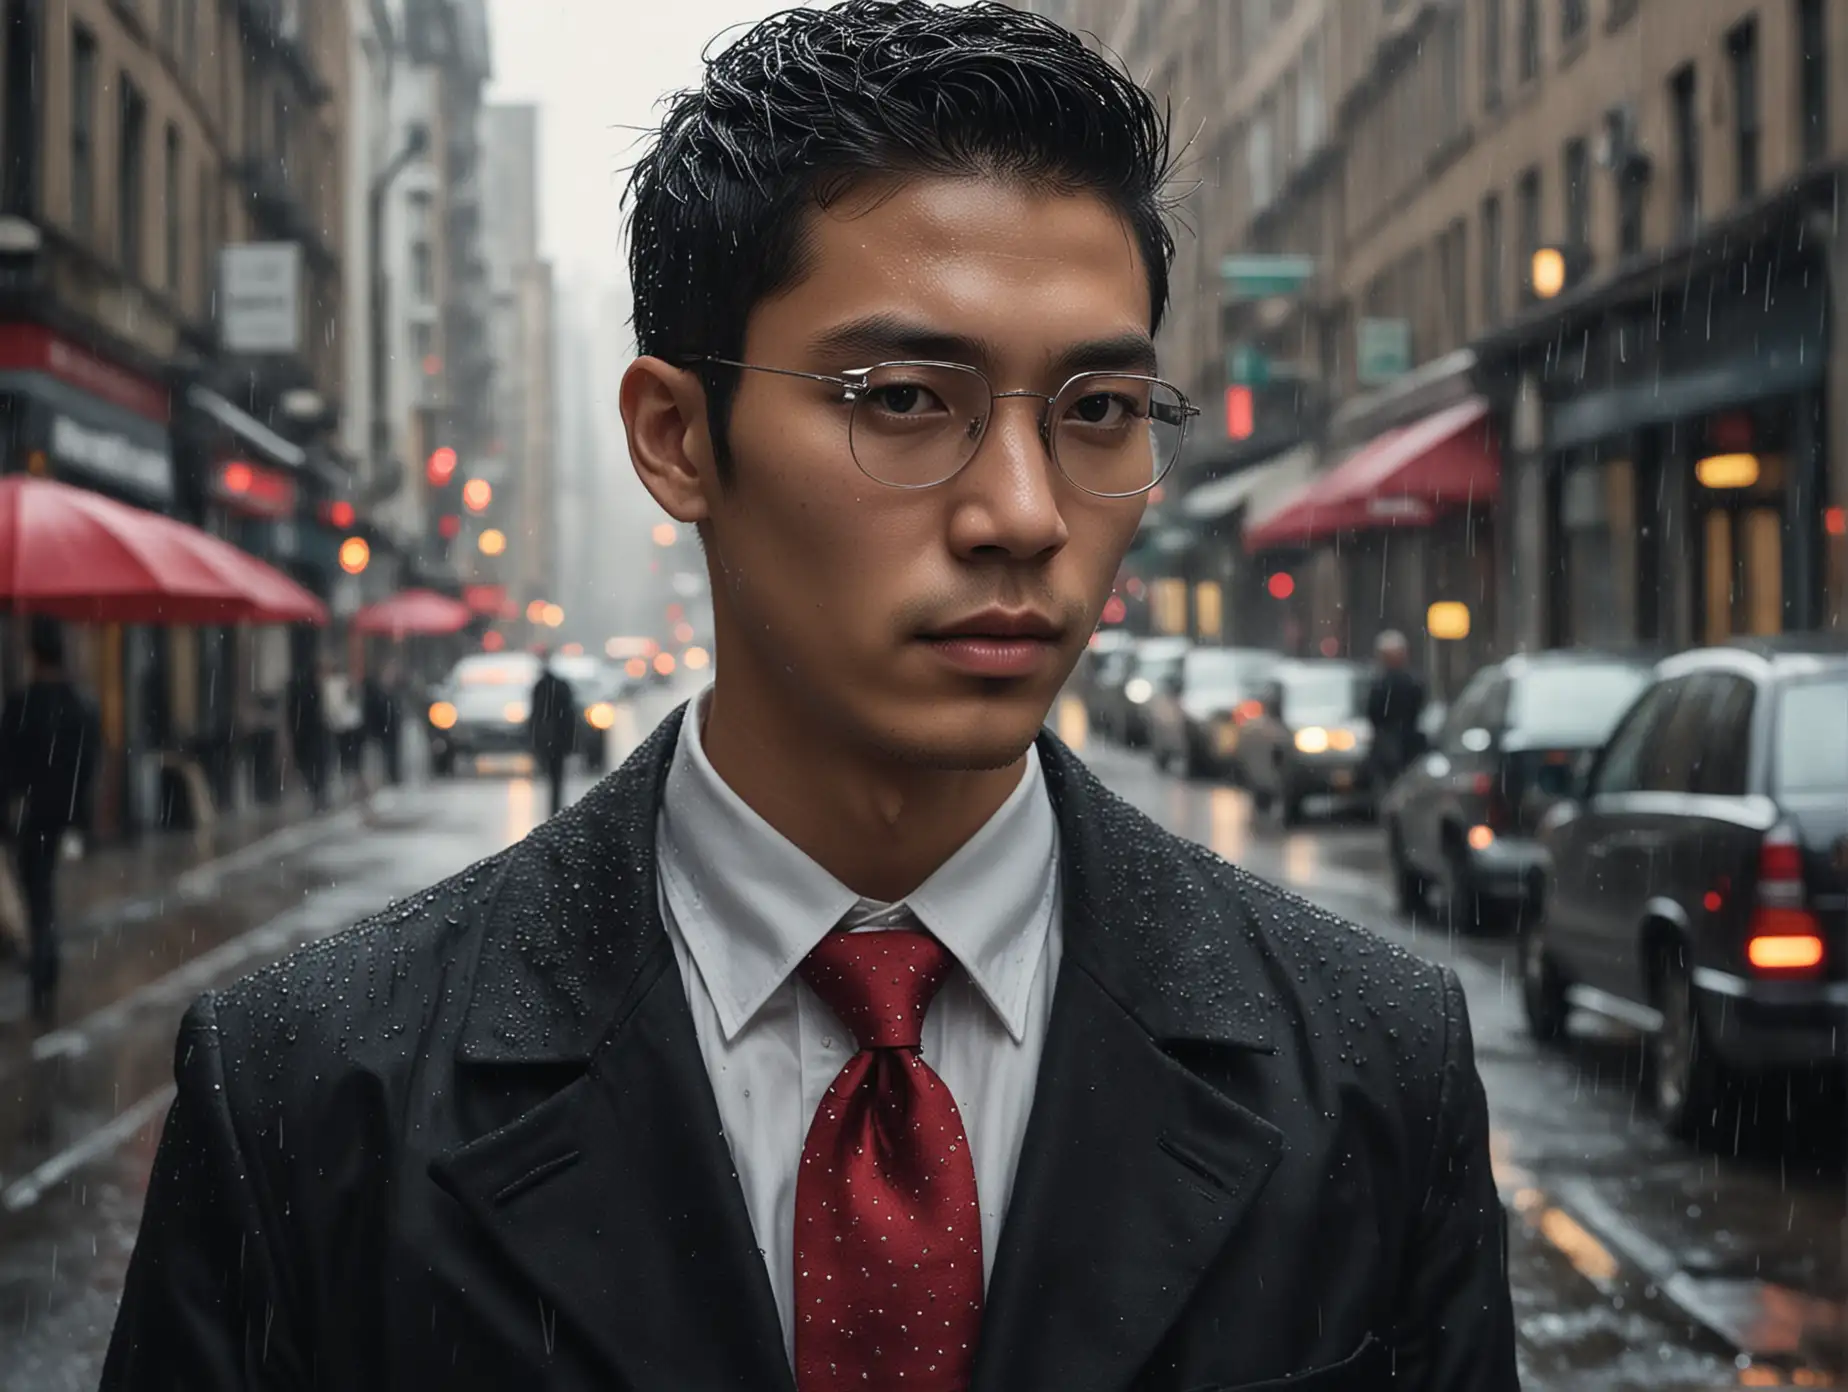 Urban-Sophistication-Confident-Asian-Man-in-Rainy-City-Street-Portrait